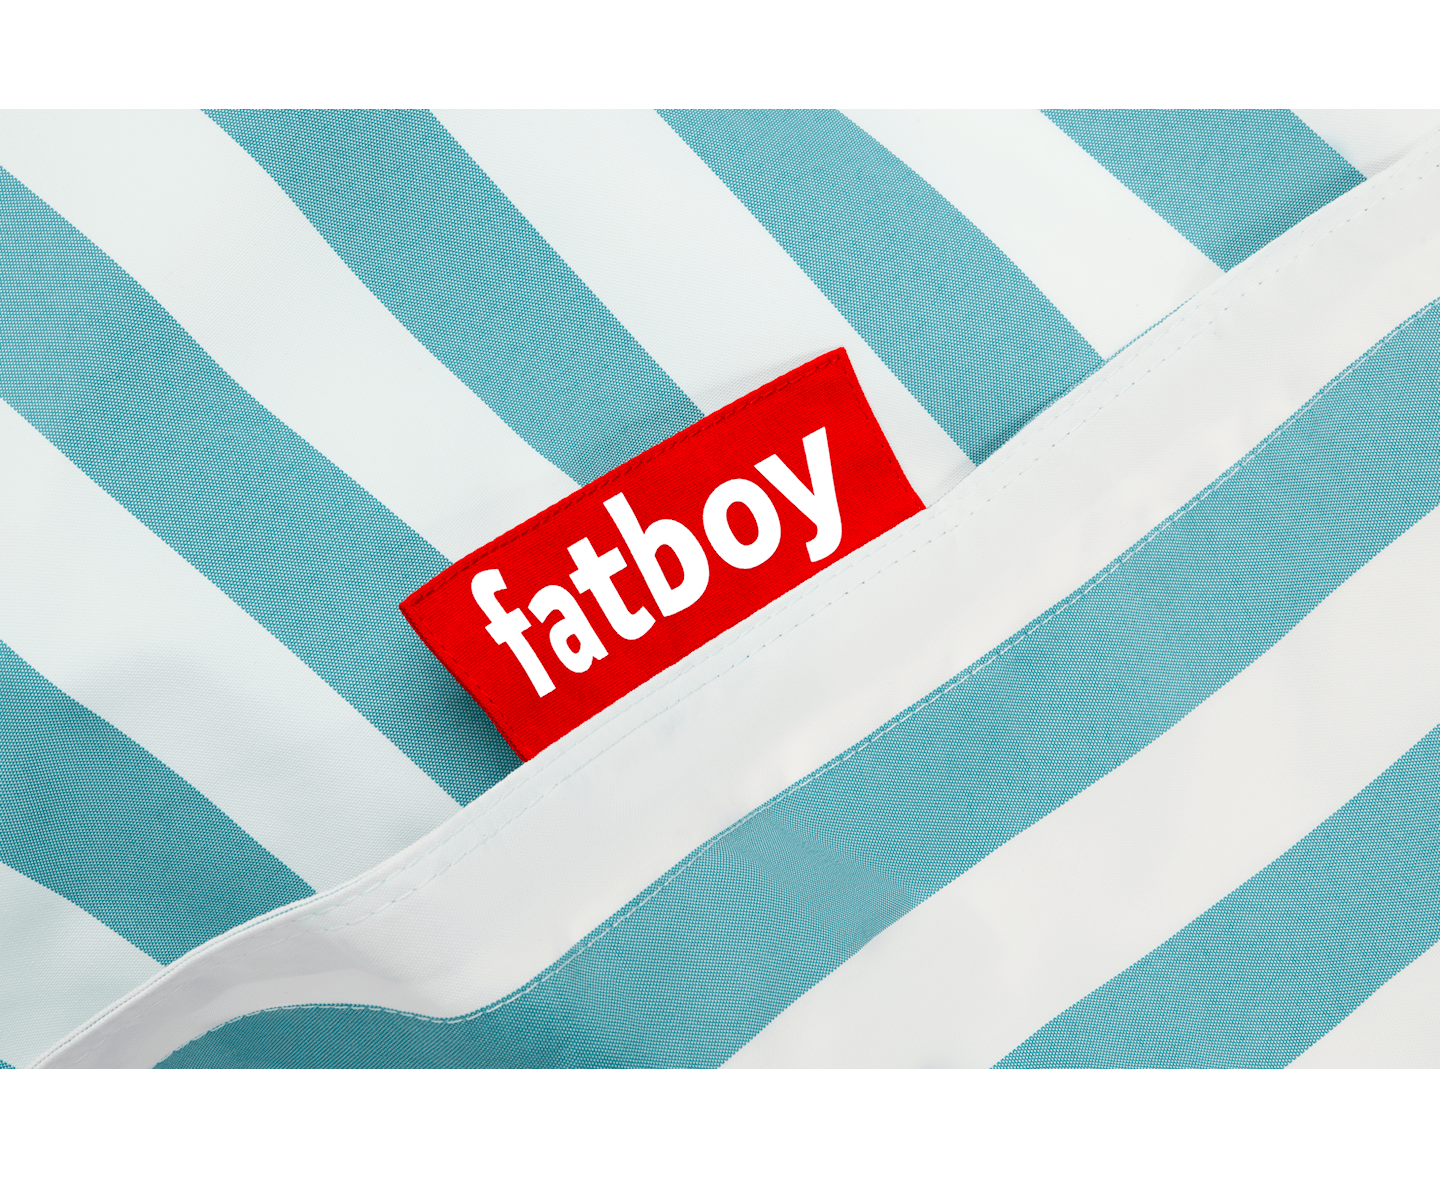 Fatboy Buggle-up Outdoor Sitzsack Streifen Azur